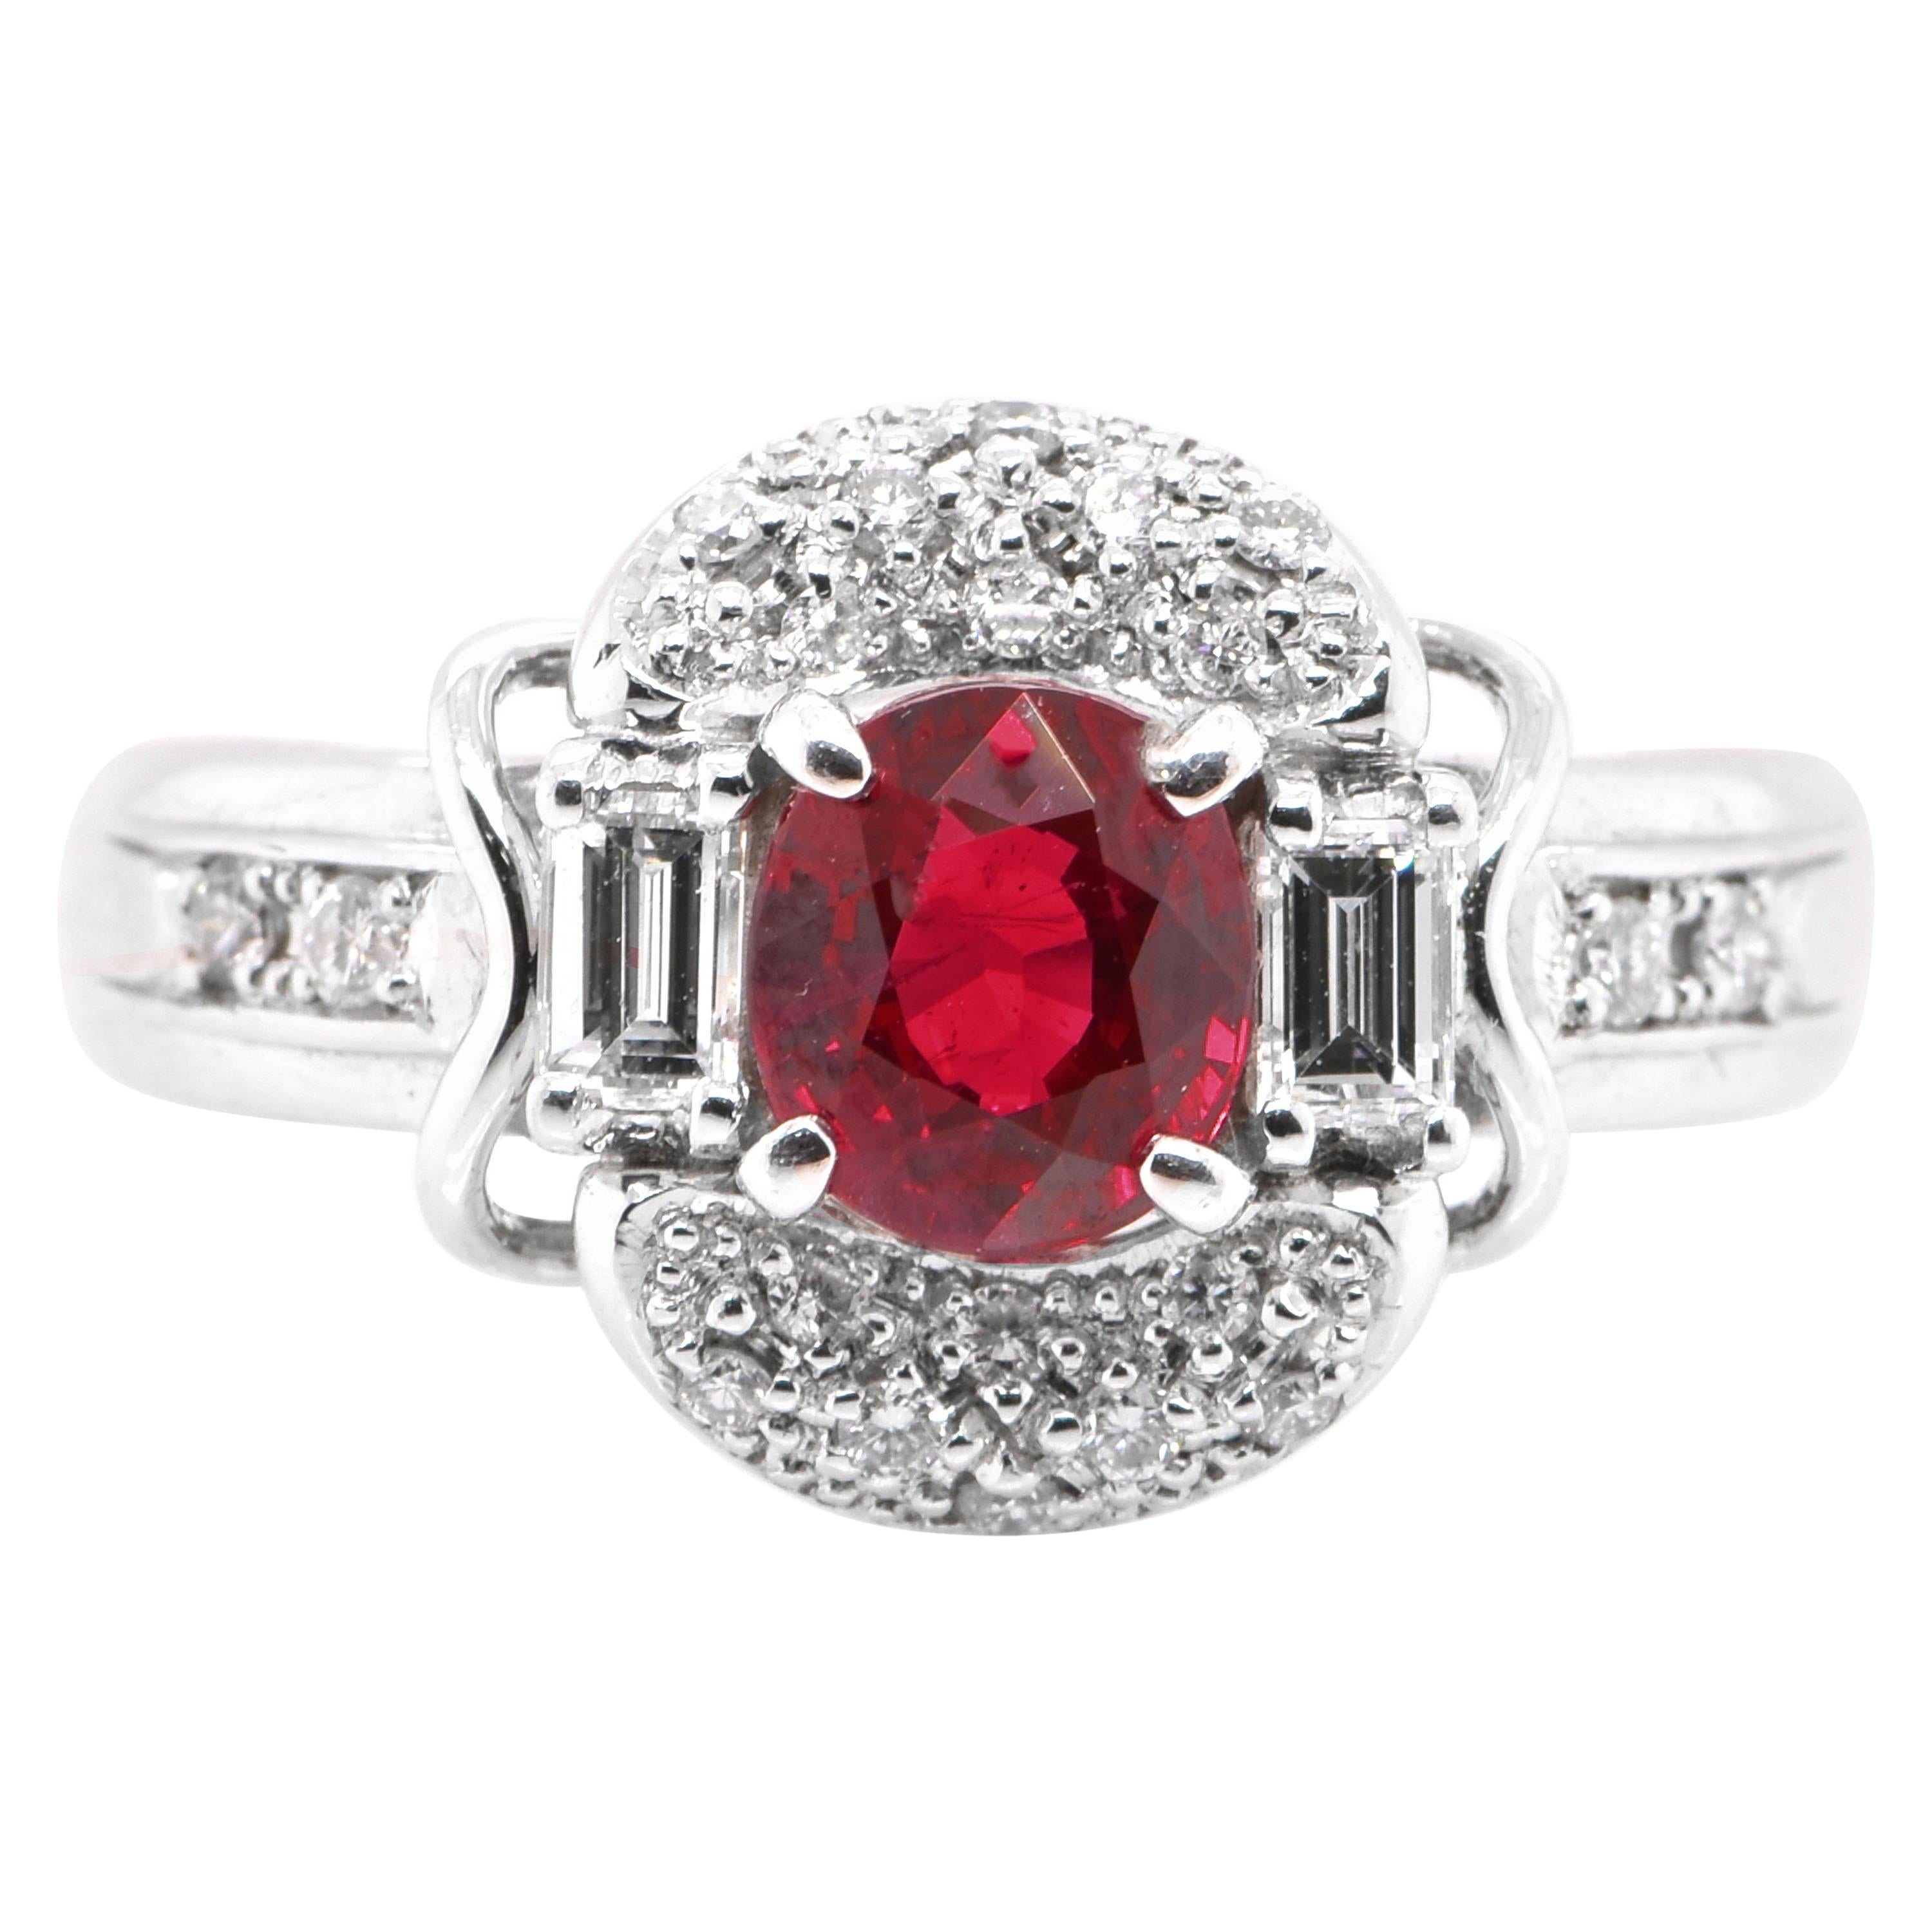 1.19 Carat Natural Vivid Red Ruby and Diamond Ring Set in Platinum